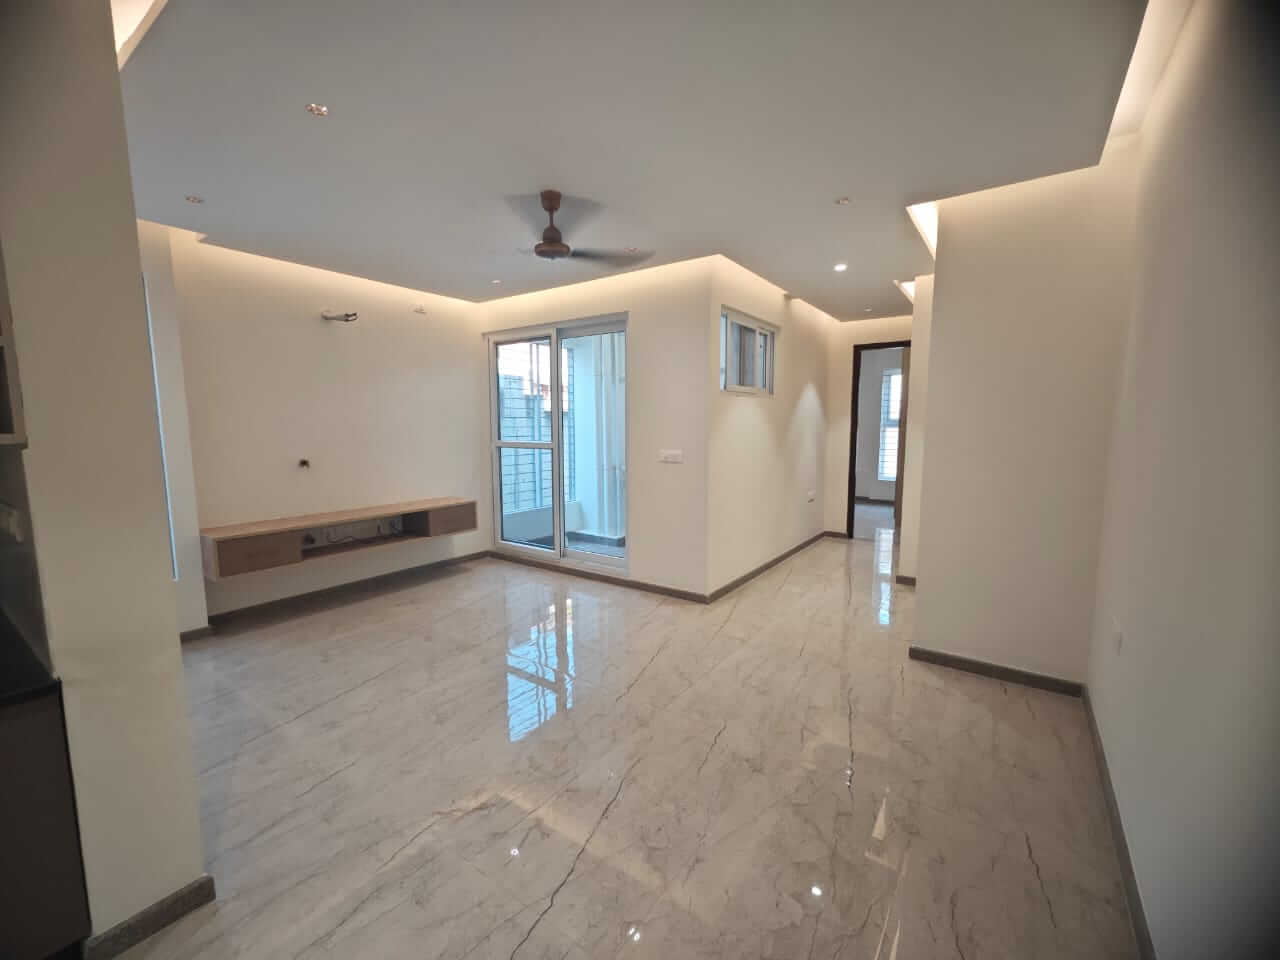 1 BHK Apartment / Flat for Rent 1020 Sq. Feet at Bangalore
, Indira Nagar